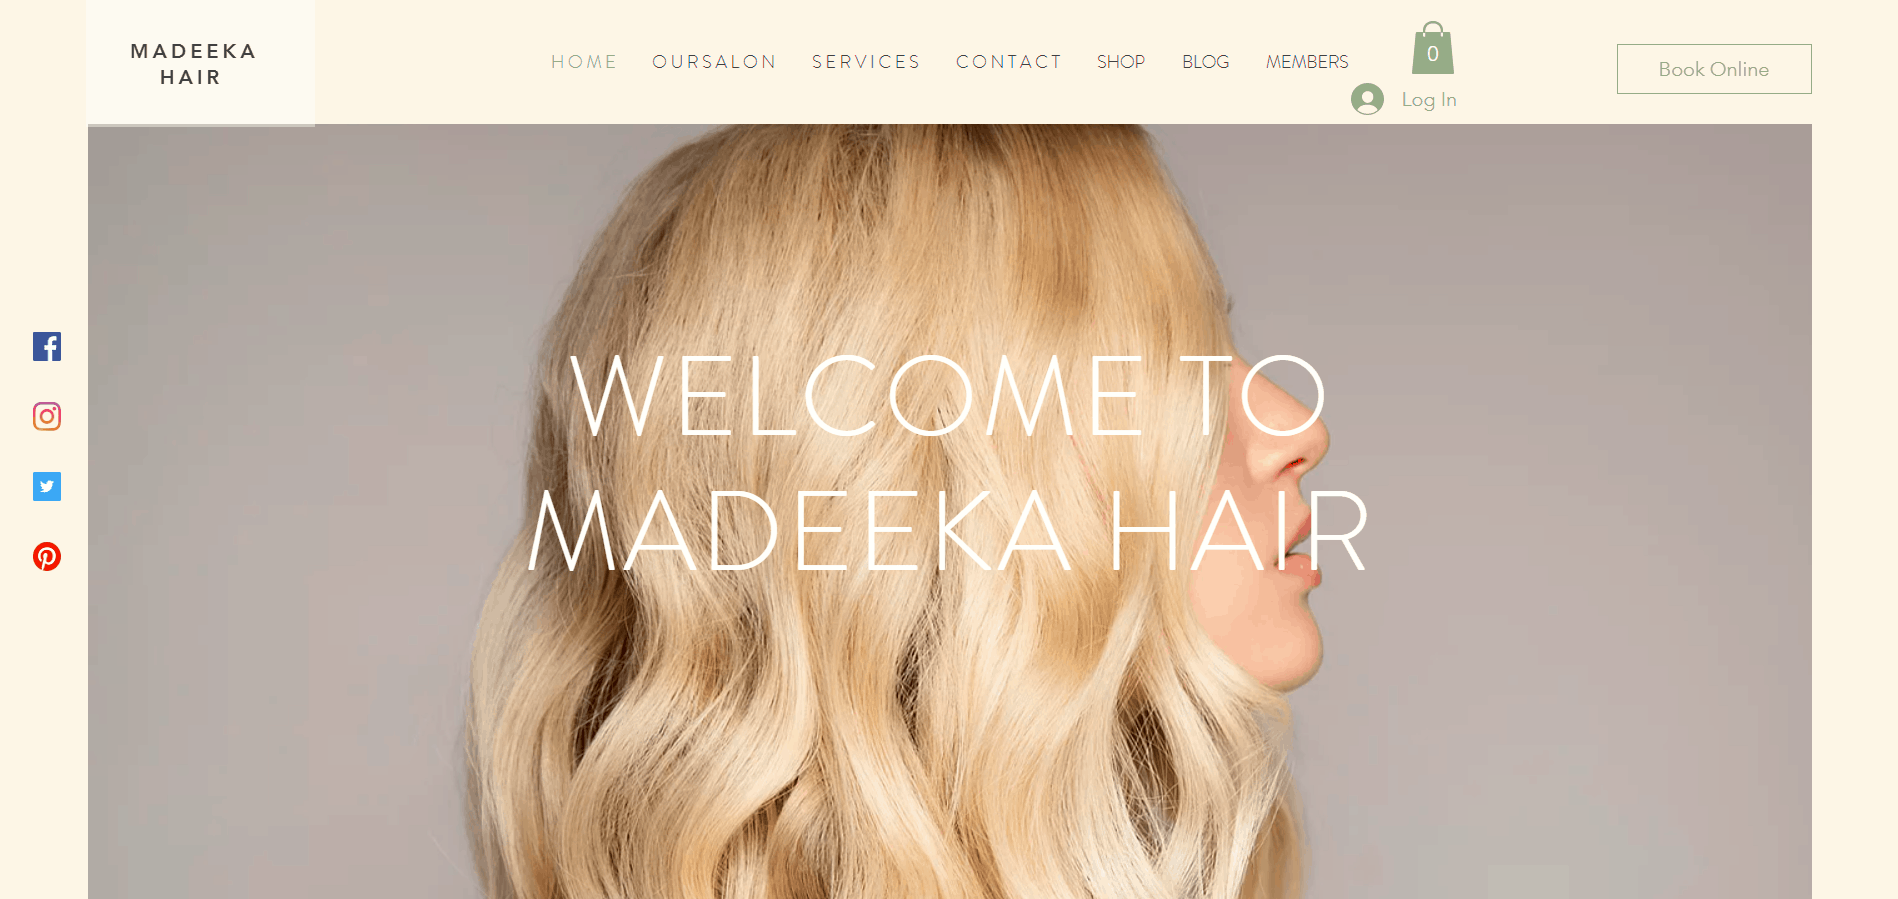 Madeeka Hair